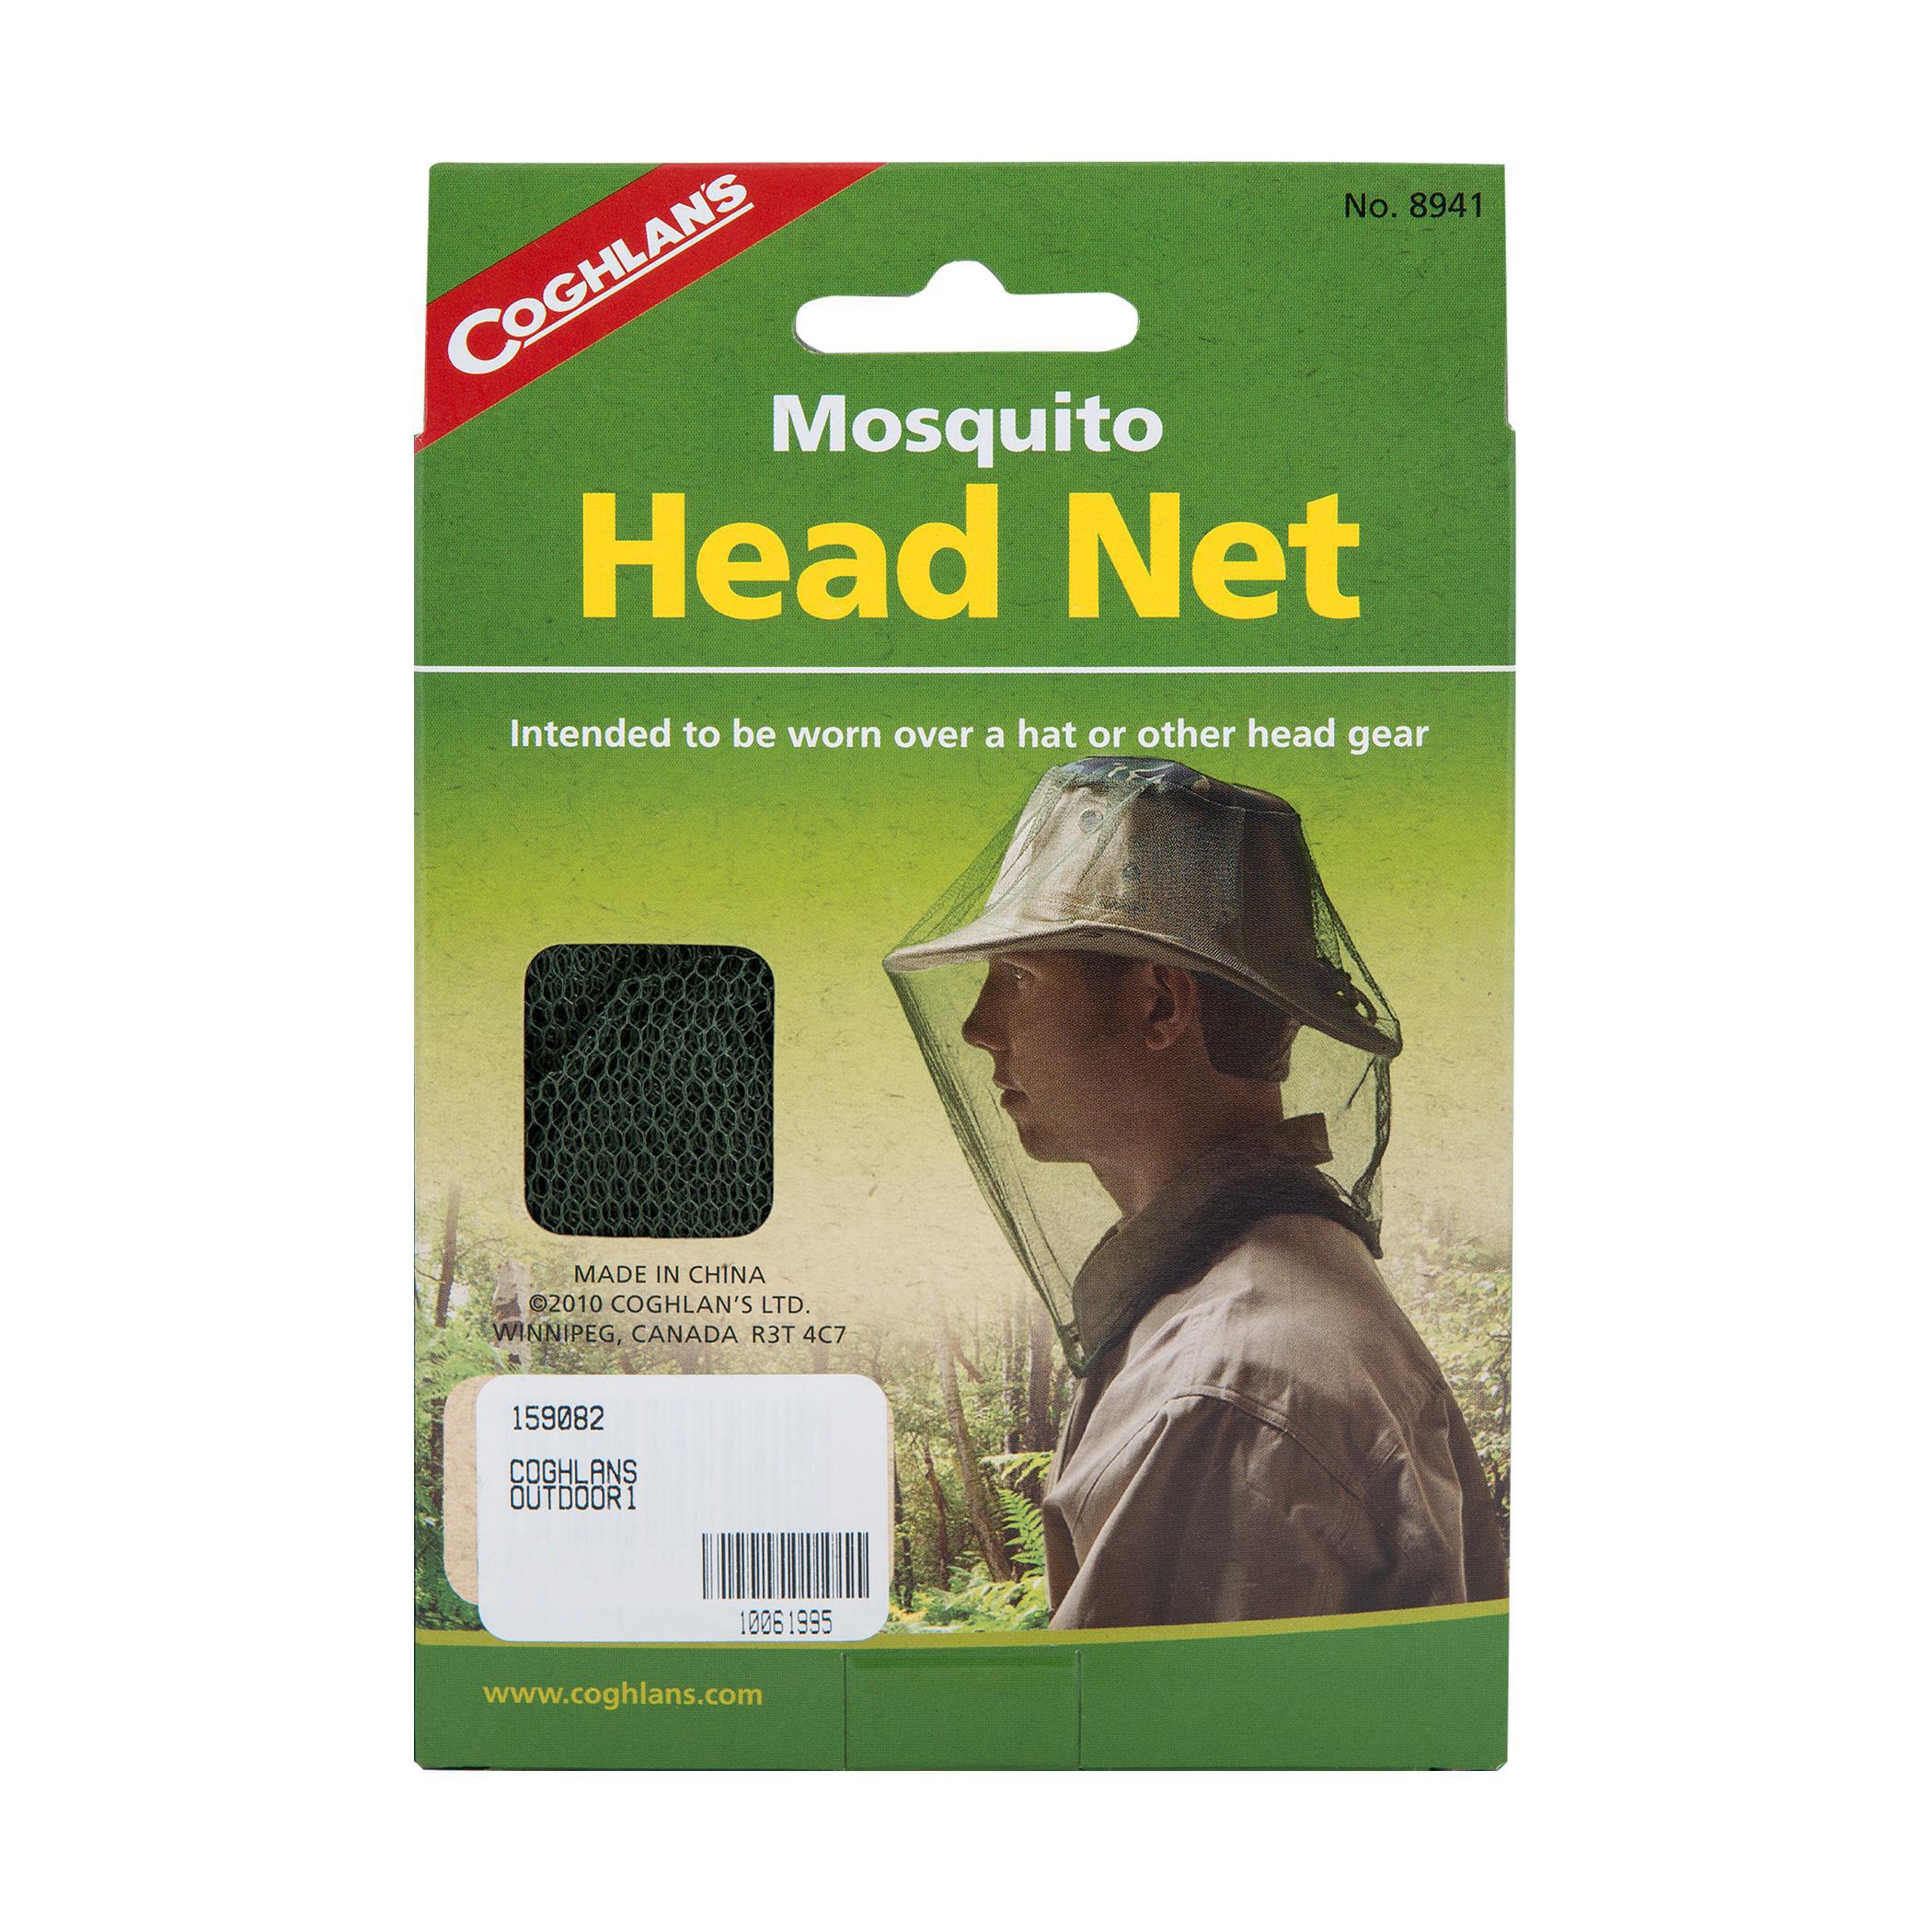  Mosquito Head Net